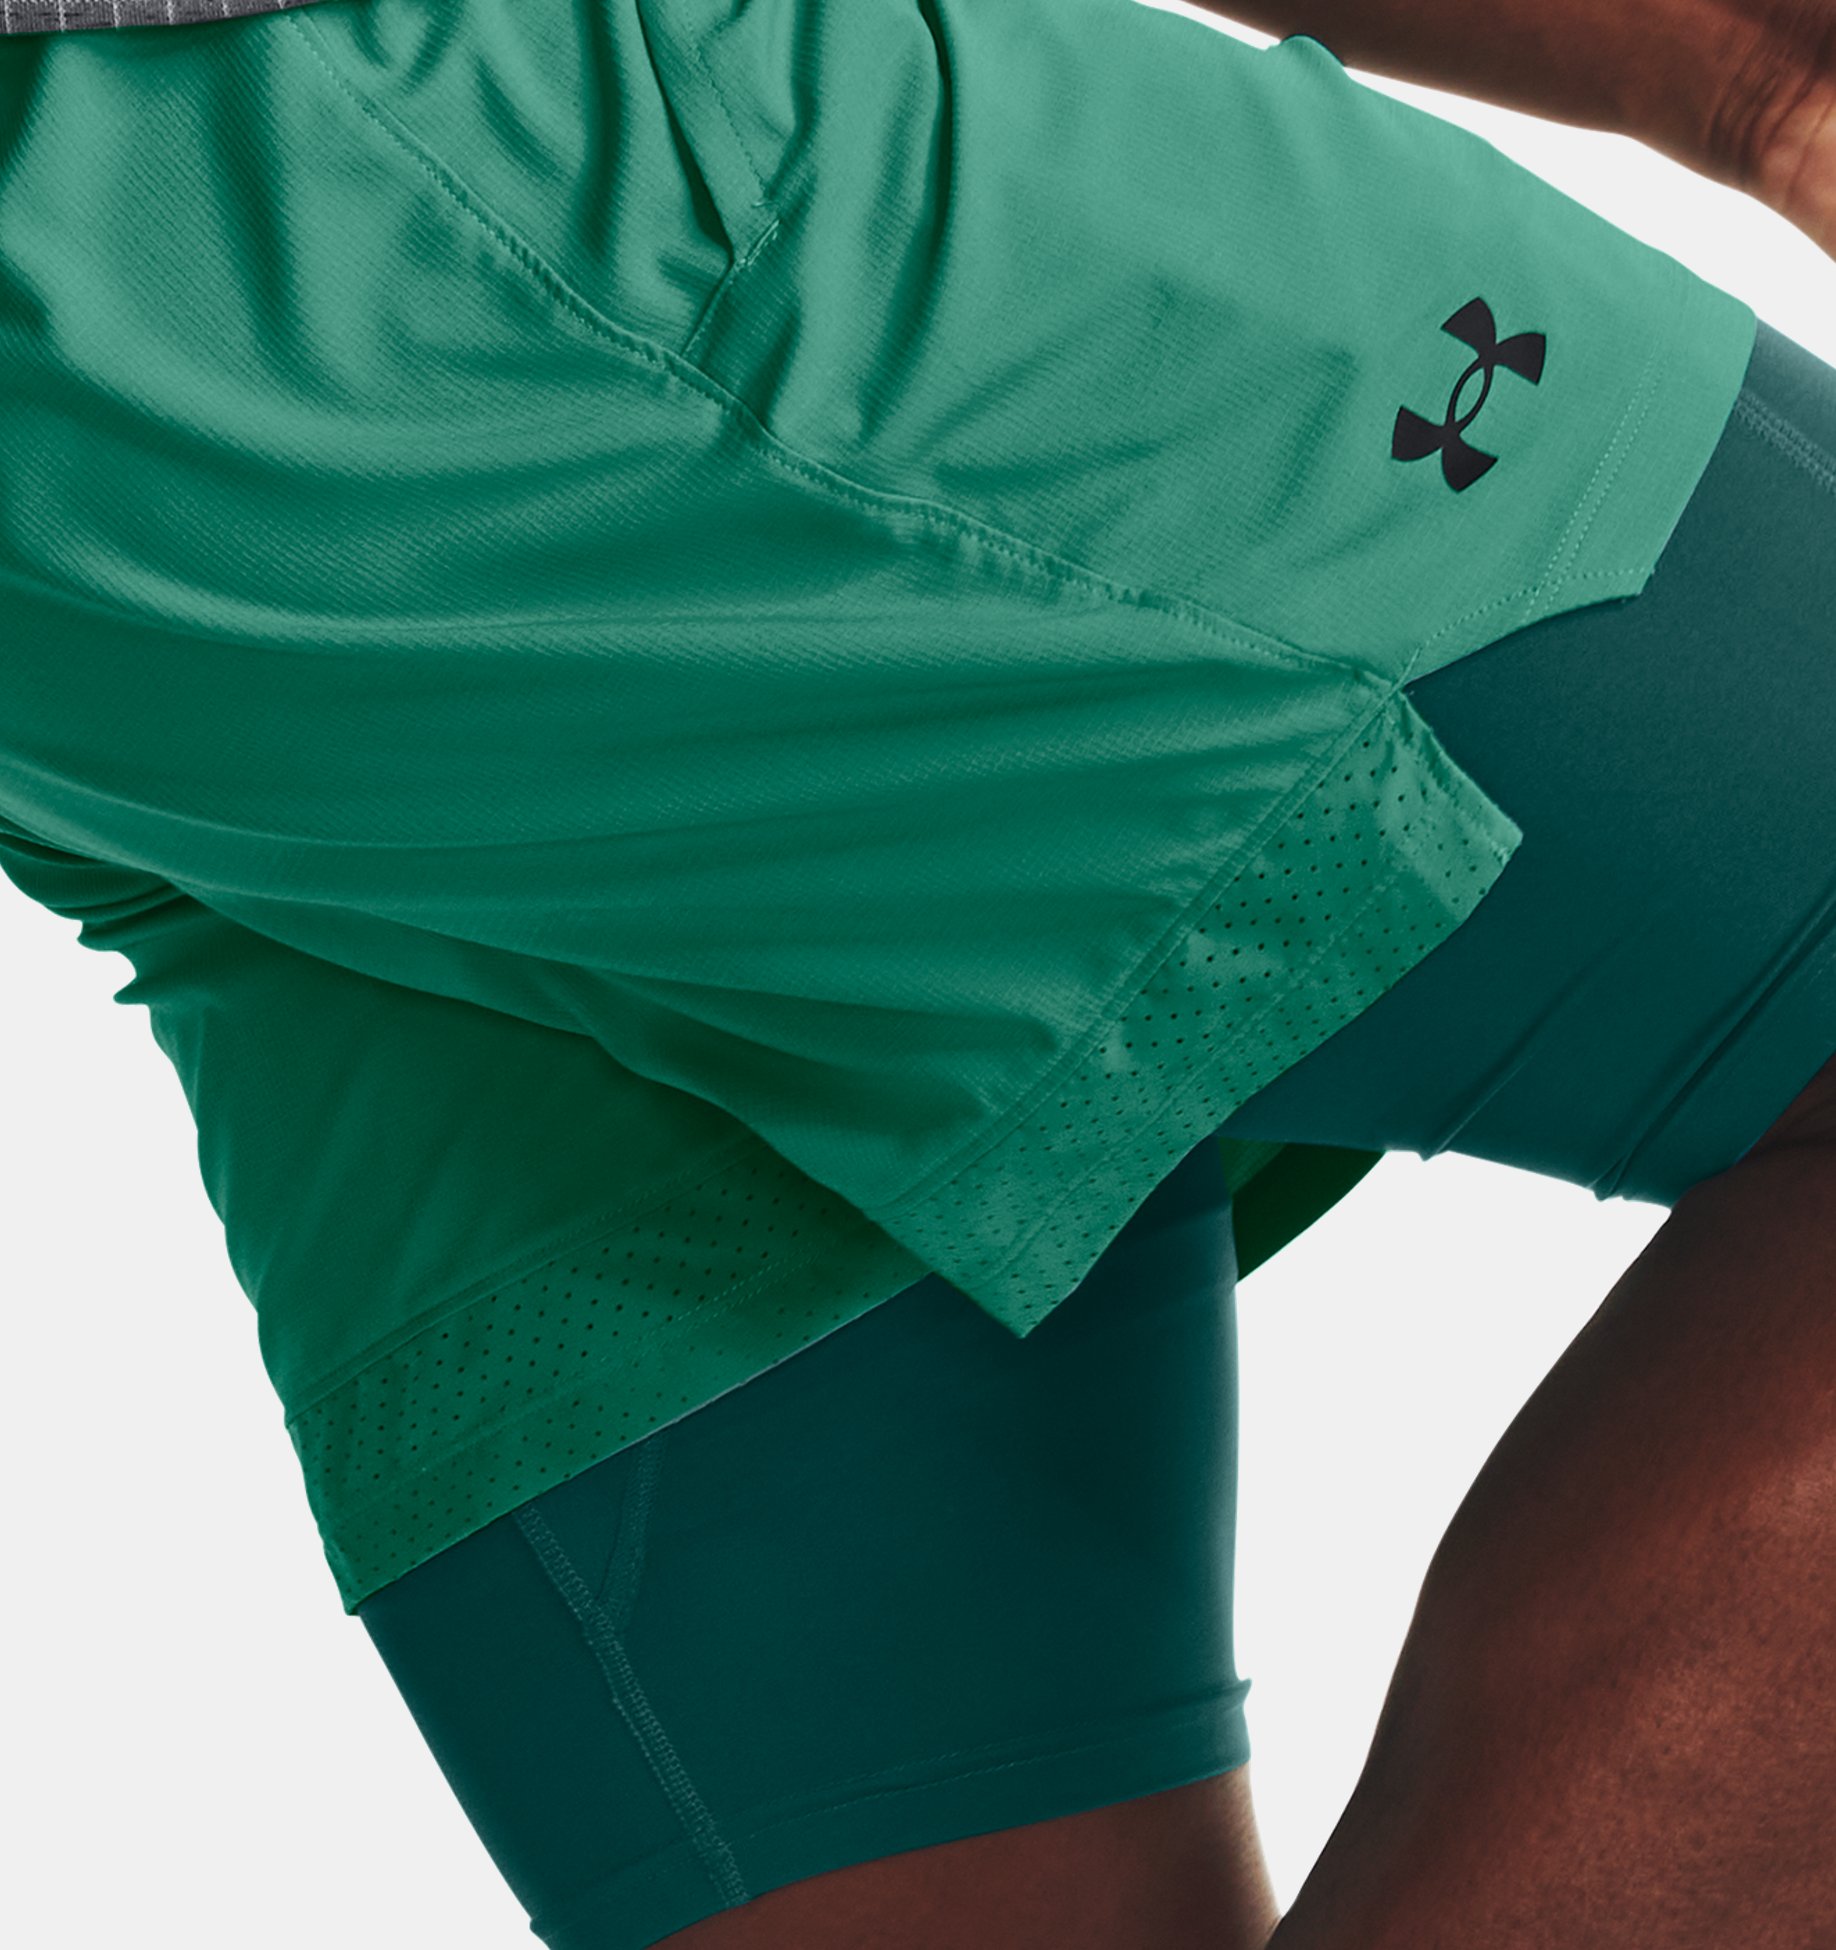 Inocencia enlace deberes Men's UA Vanish Woven 2-in-1 Shorts | Under Armour